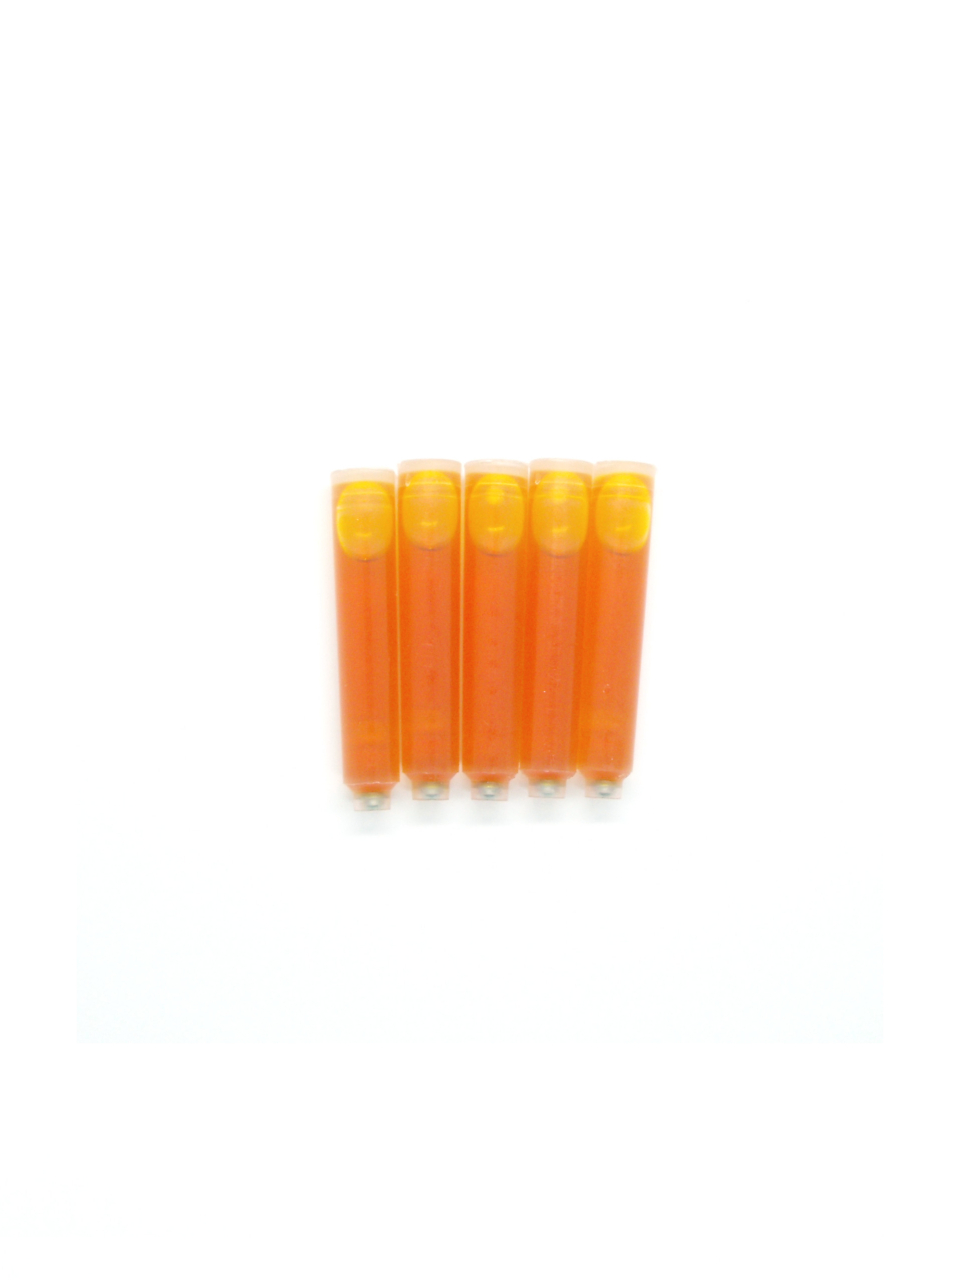 PenConverter Ink Cartridges For Pineider Fountain Pens (Yellow)